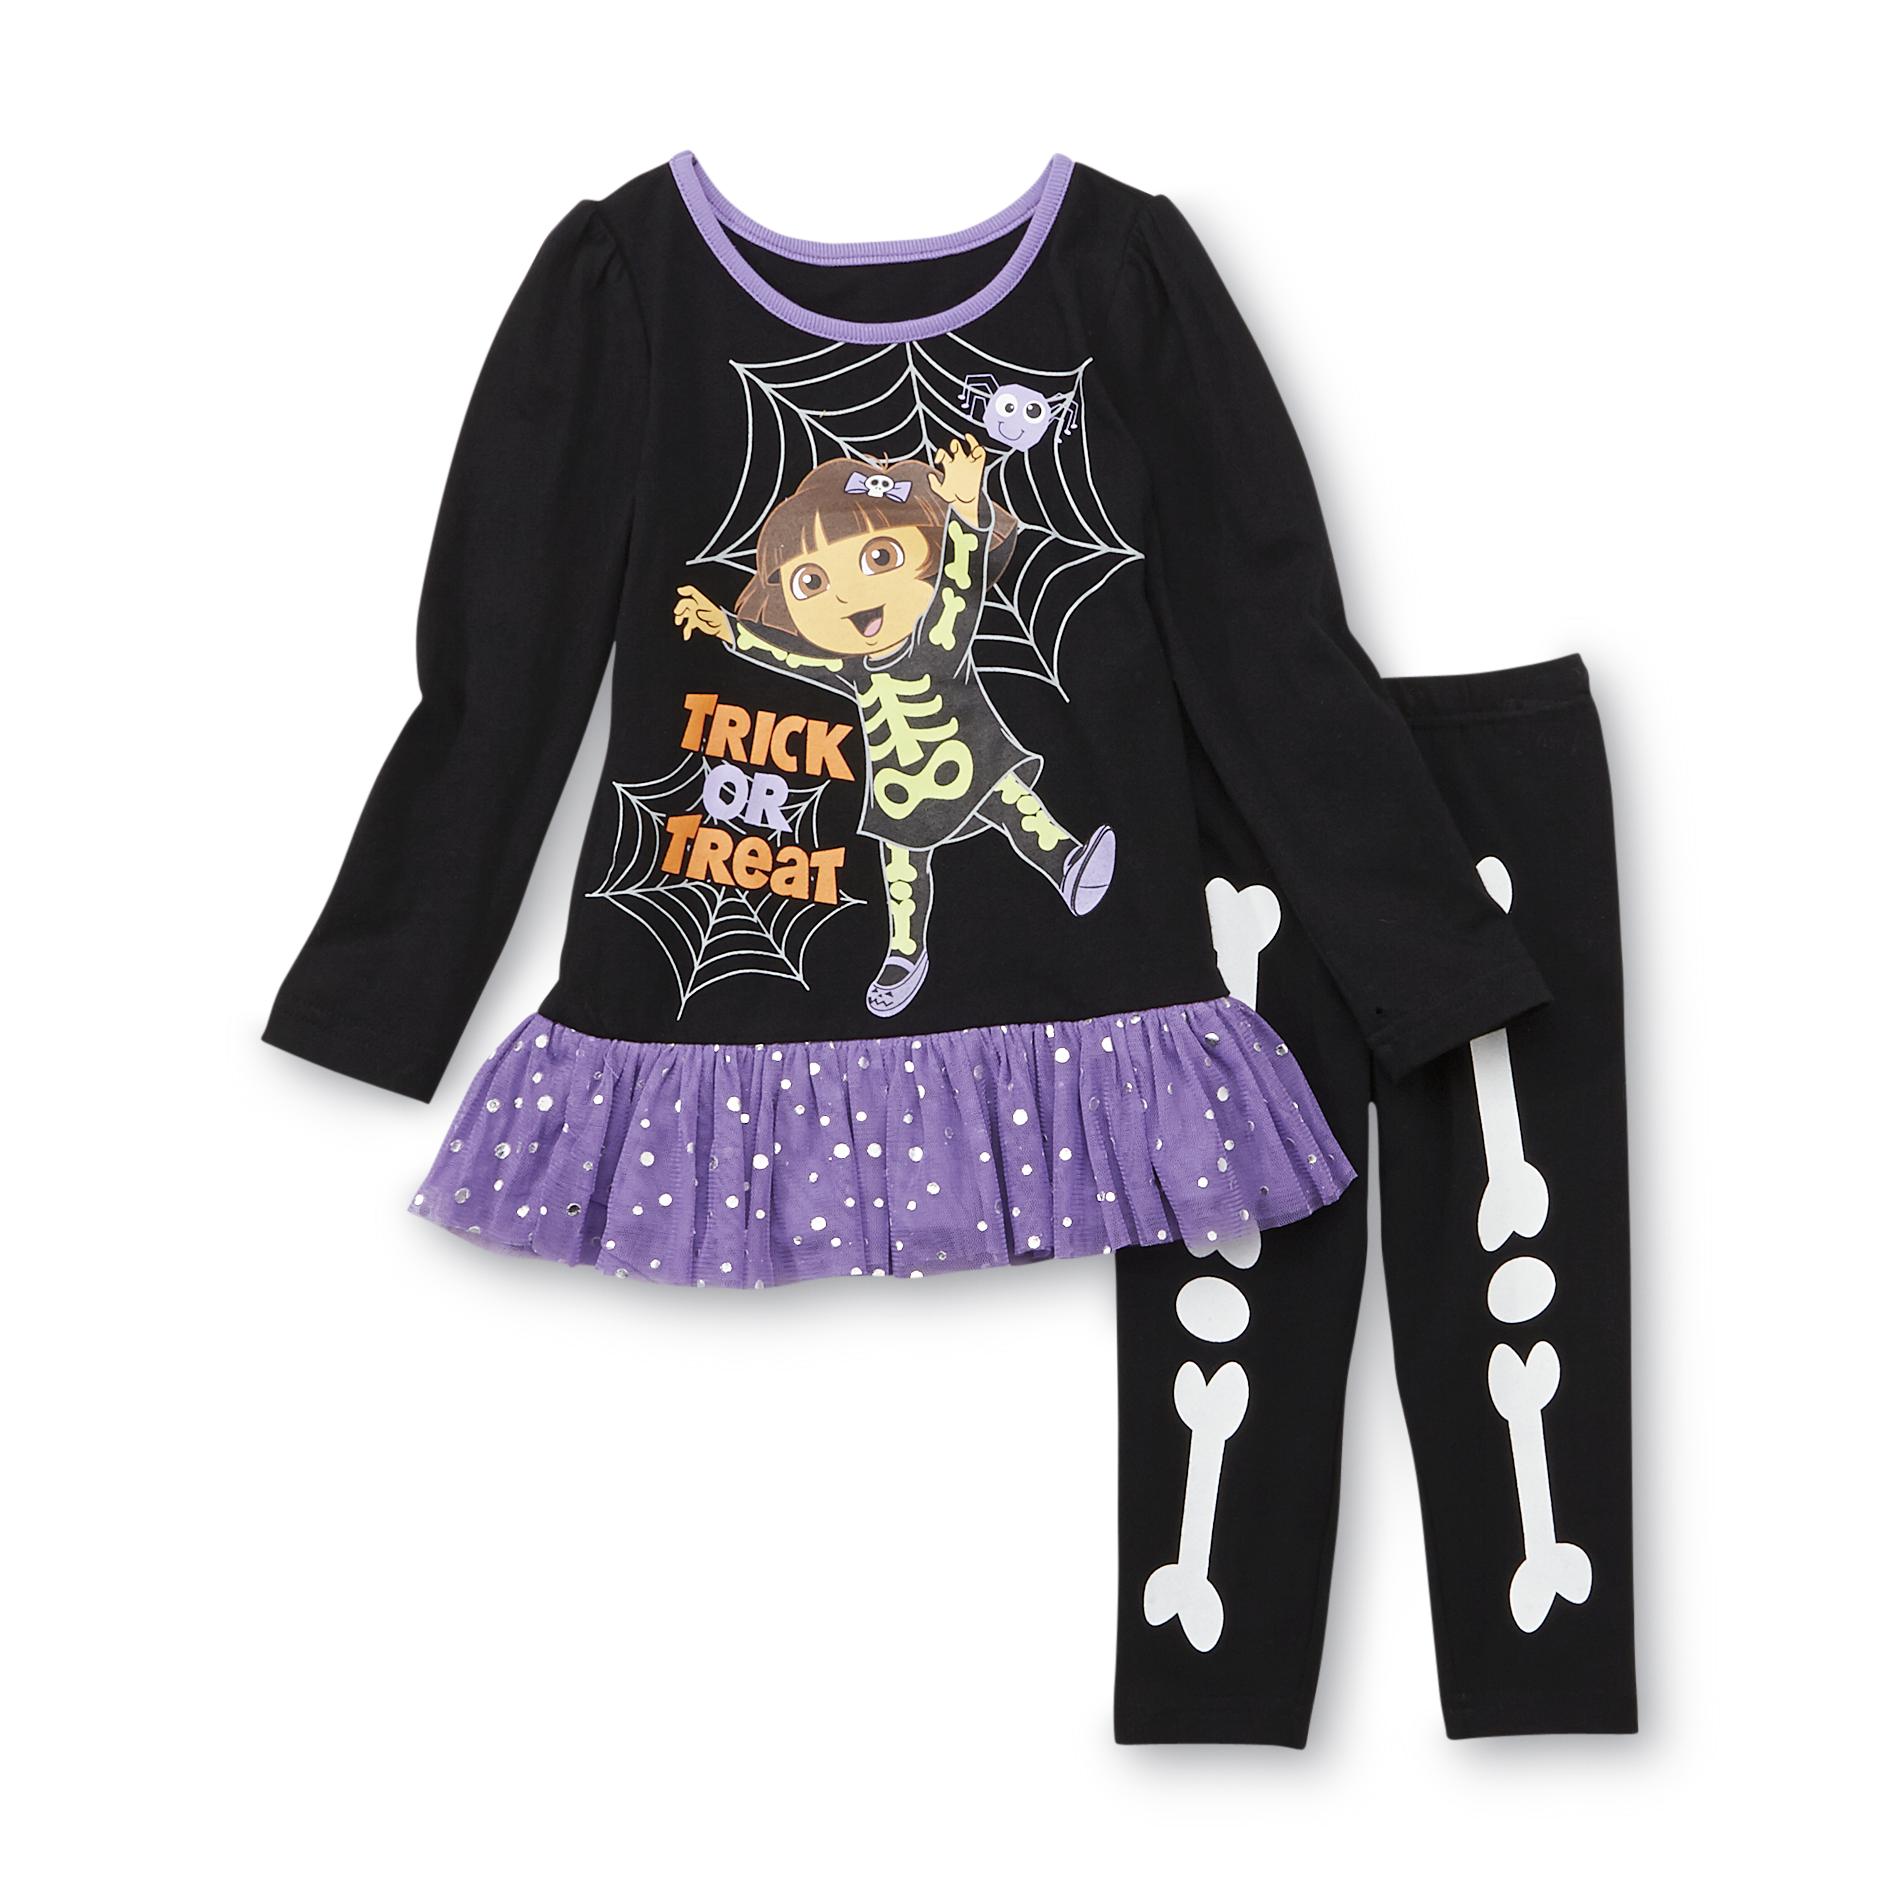 Nickelodeon Dora the Explorer Infant & Toddler Girl's Halloween Outfit